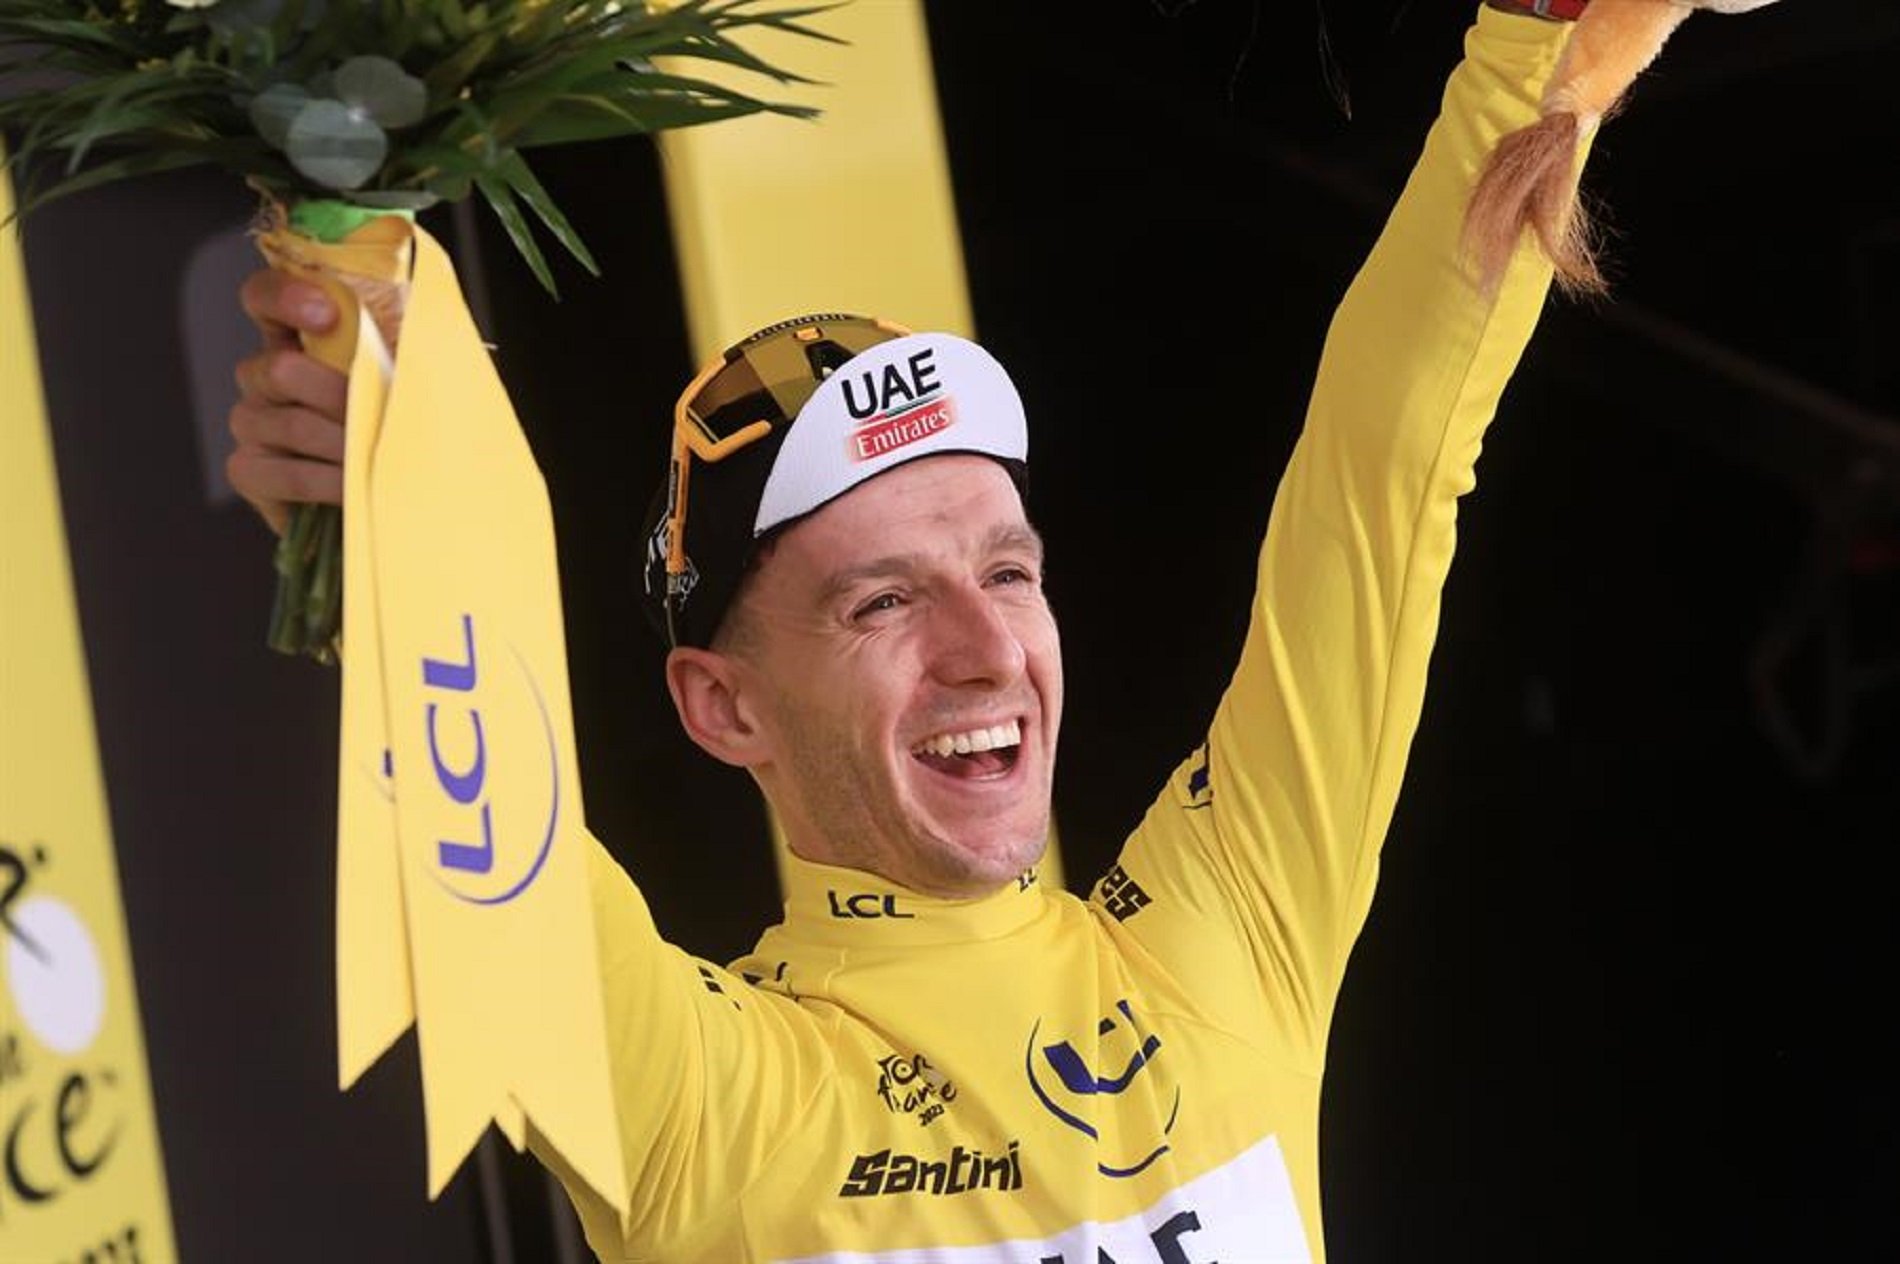 Adam Yates gana la primera etapa del Tour de Francia